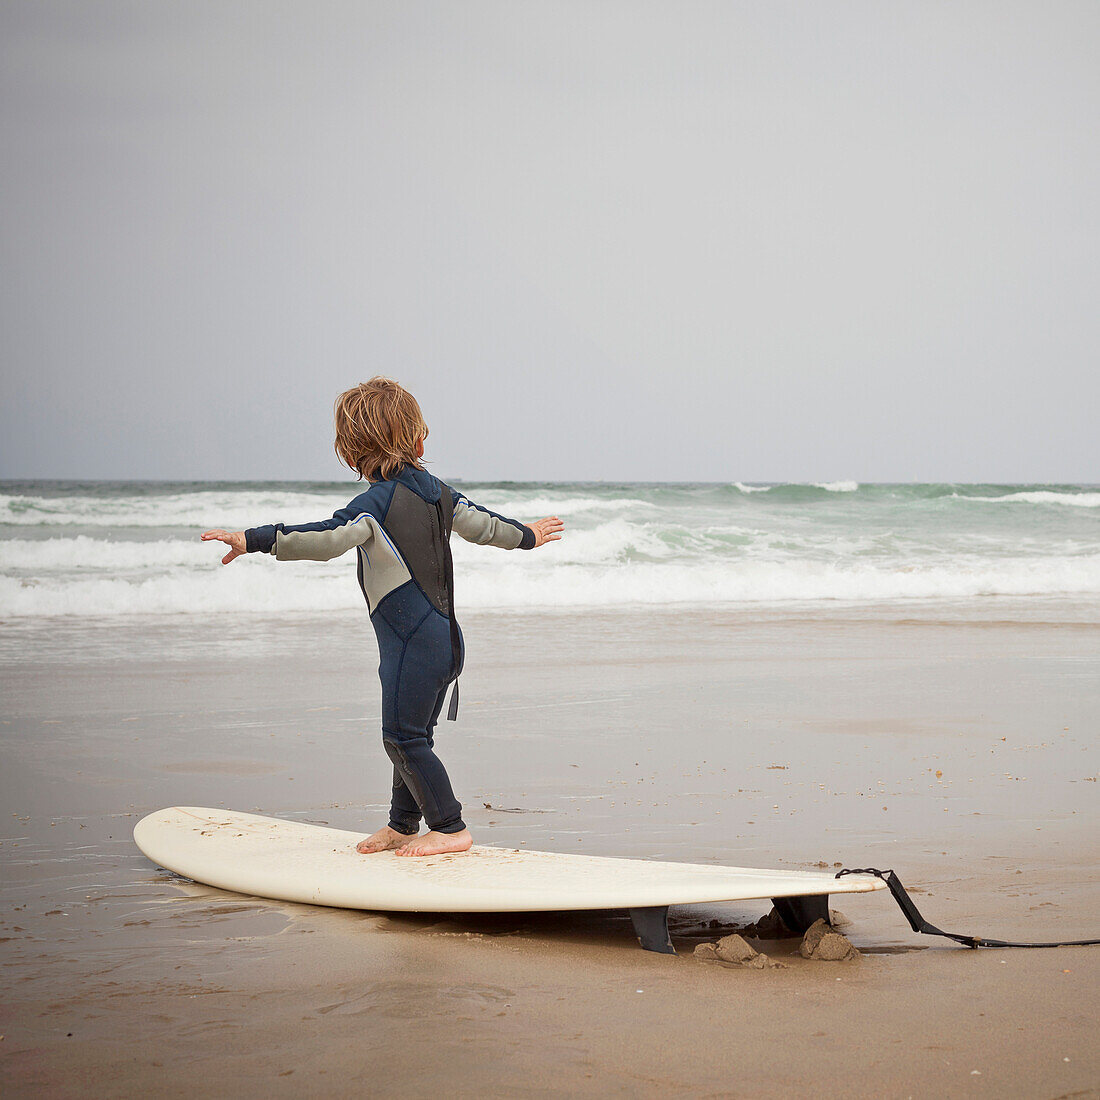 Caucasian boy practicing surfing on beach, Manhattan Beach, California, USA